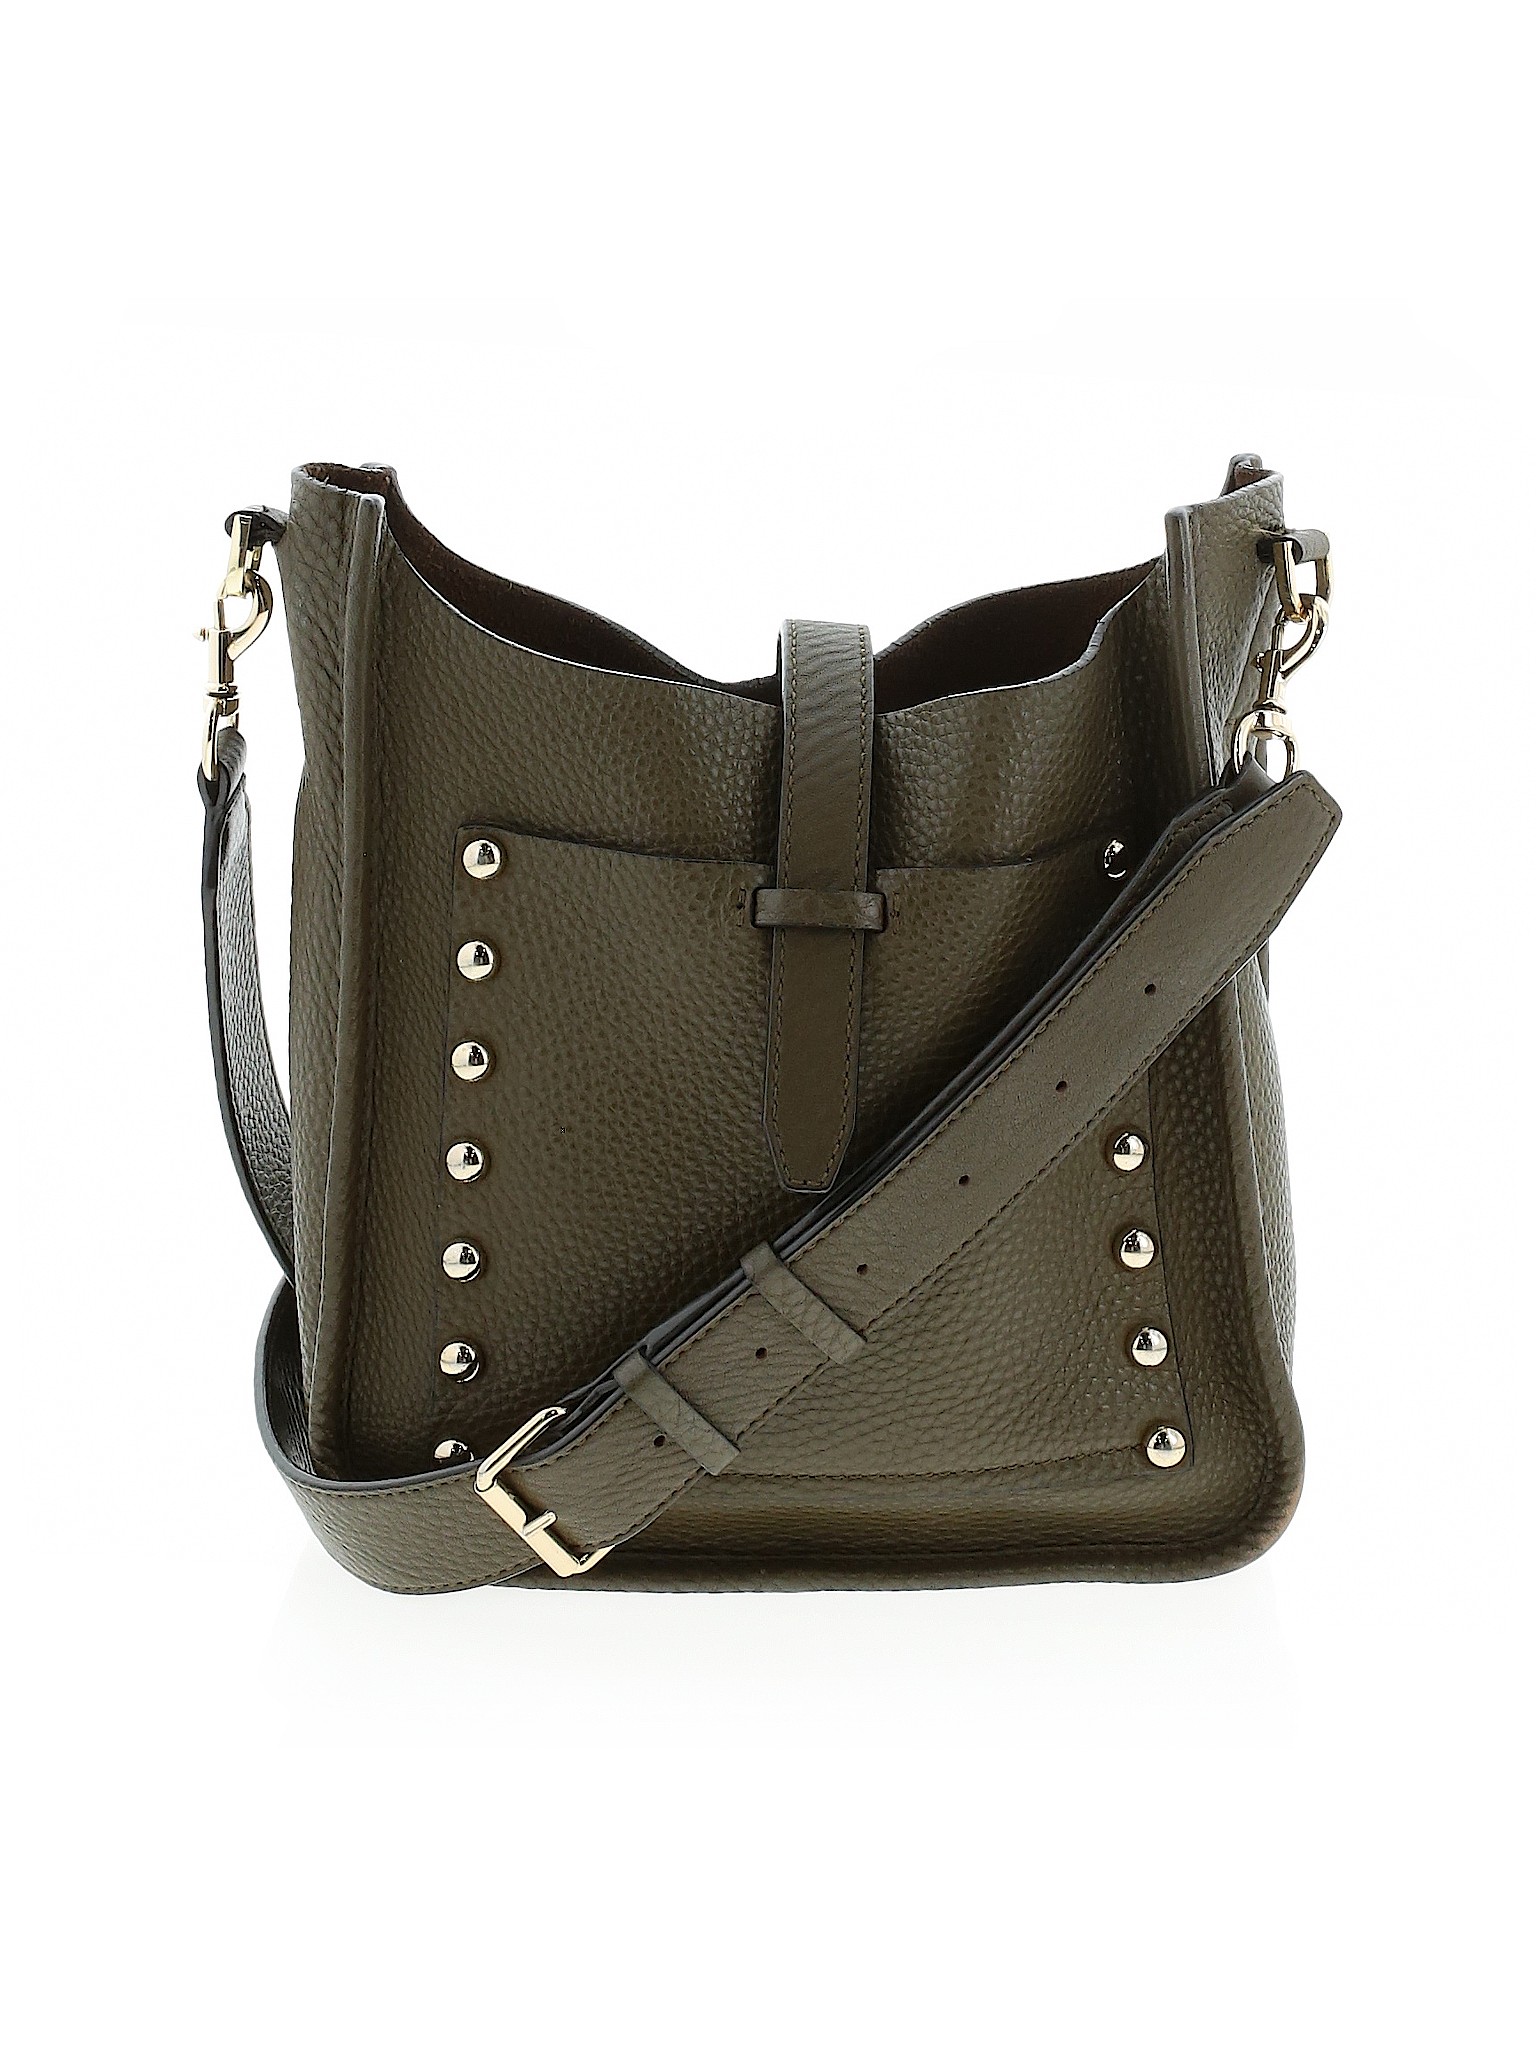 Rebecca Minkoff 100% Leather Brown Leather Shoulder Bag One Size - 64% ...